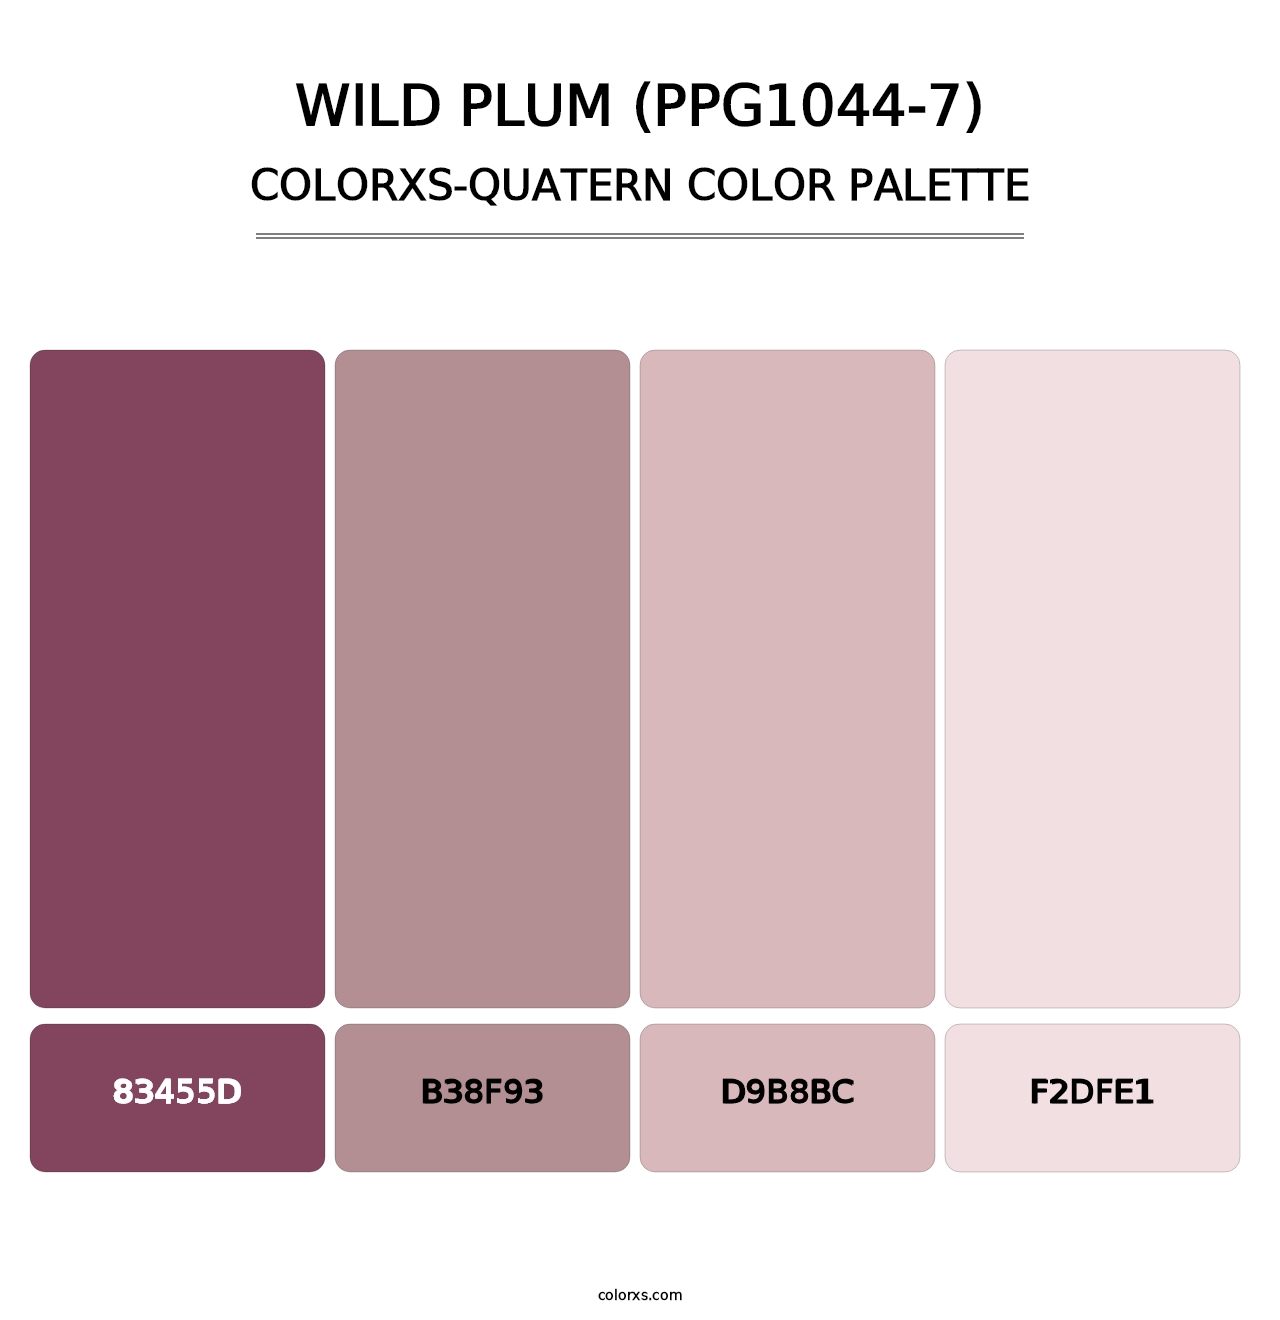 Wild Plum (PPG1044-7) - Colorxs Quatern Palette